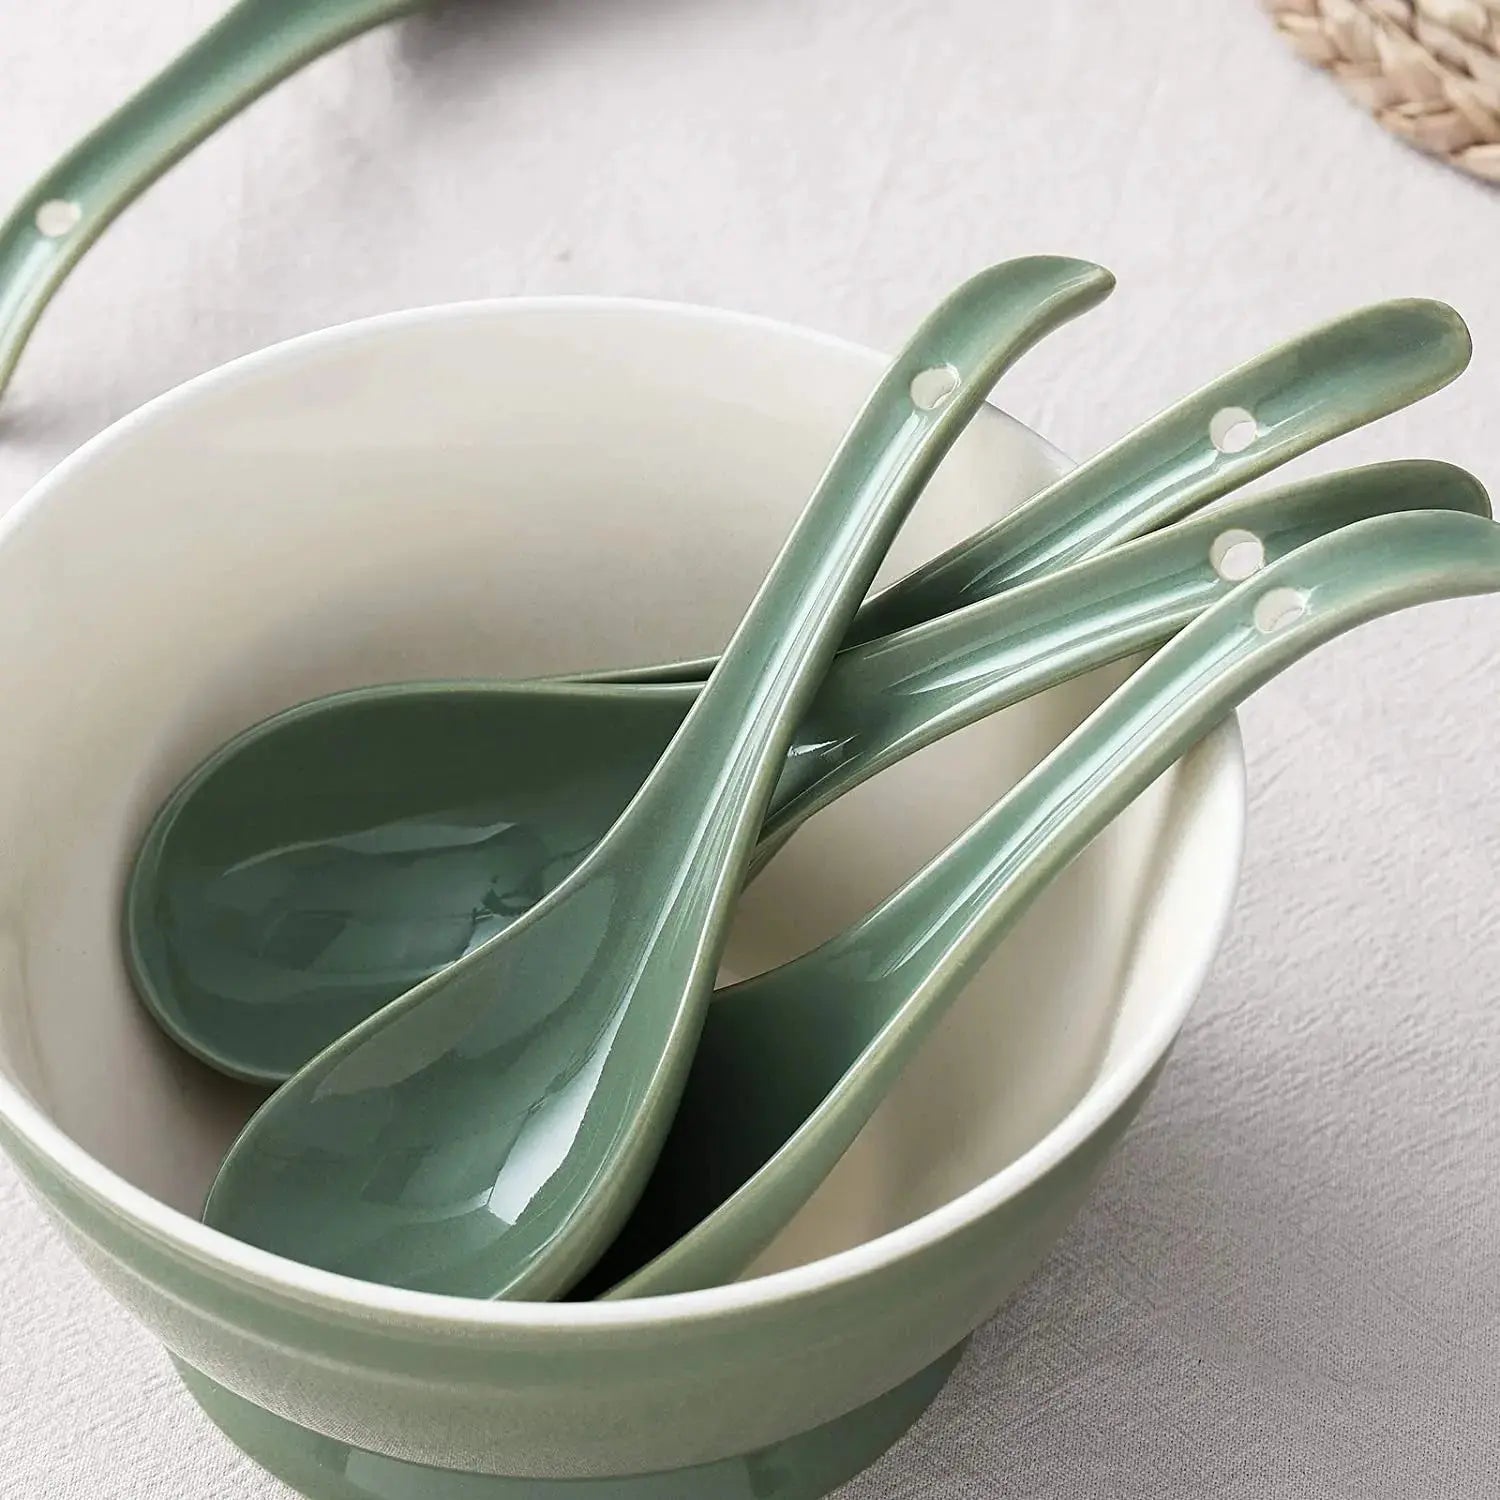 Ceramic Soup Spoons – Dowan®